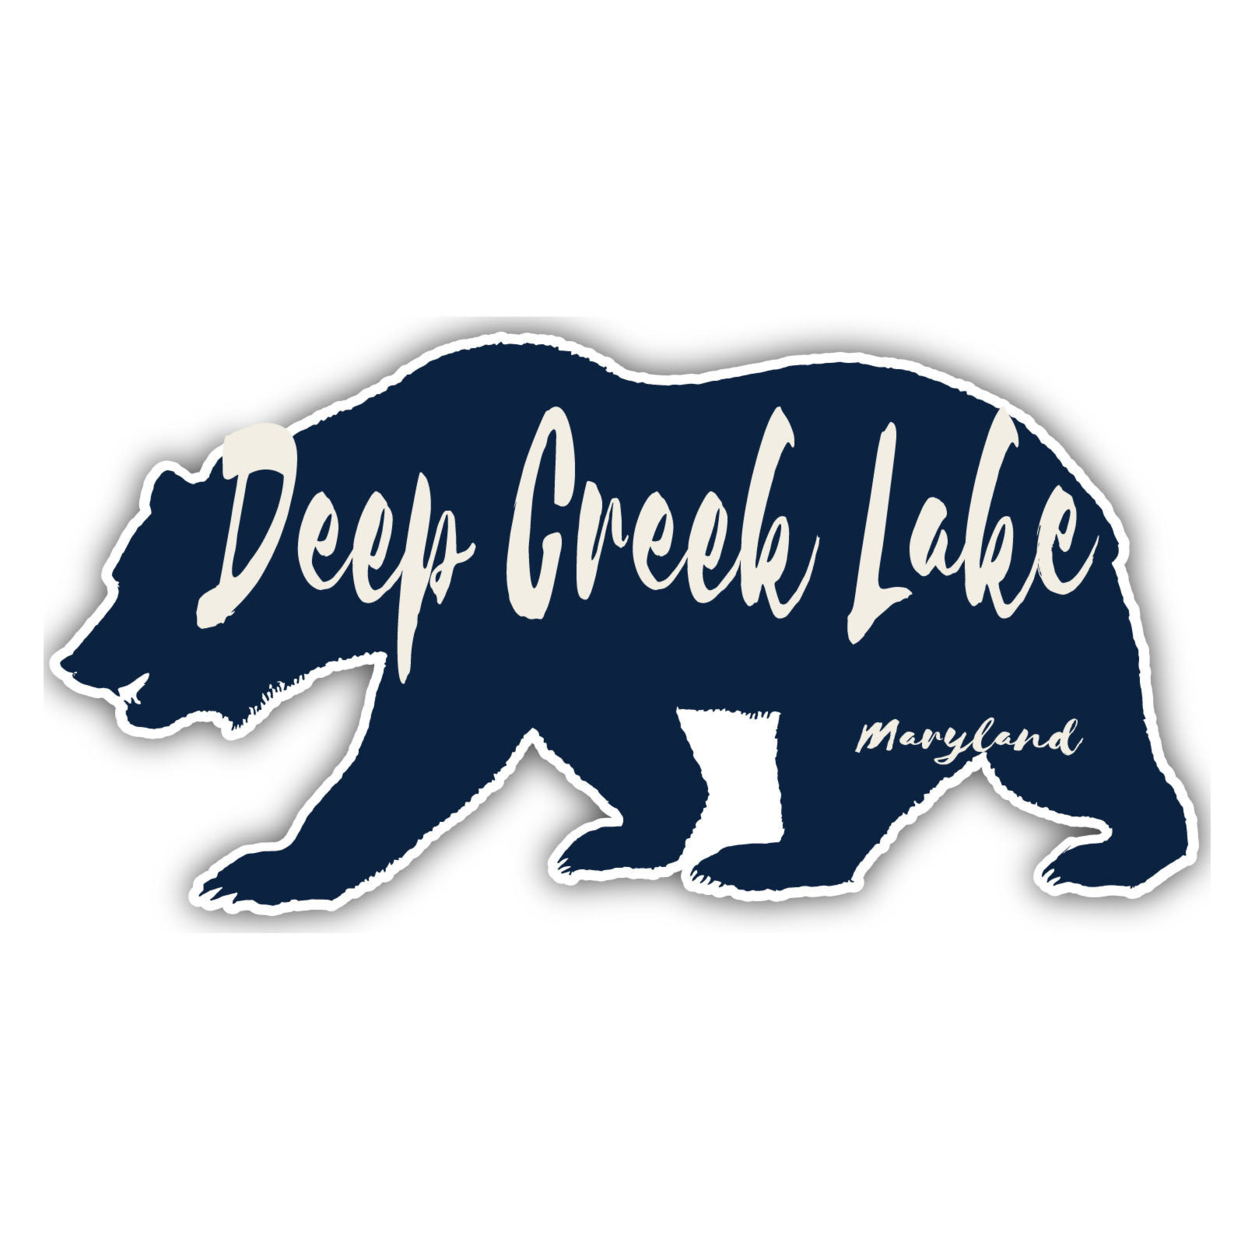 Deep Creek Lake Maryland Souvenir Decorative Stickers (Choose Theme And Size) - Single Unit, 6-Inch, Bear